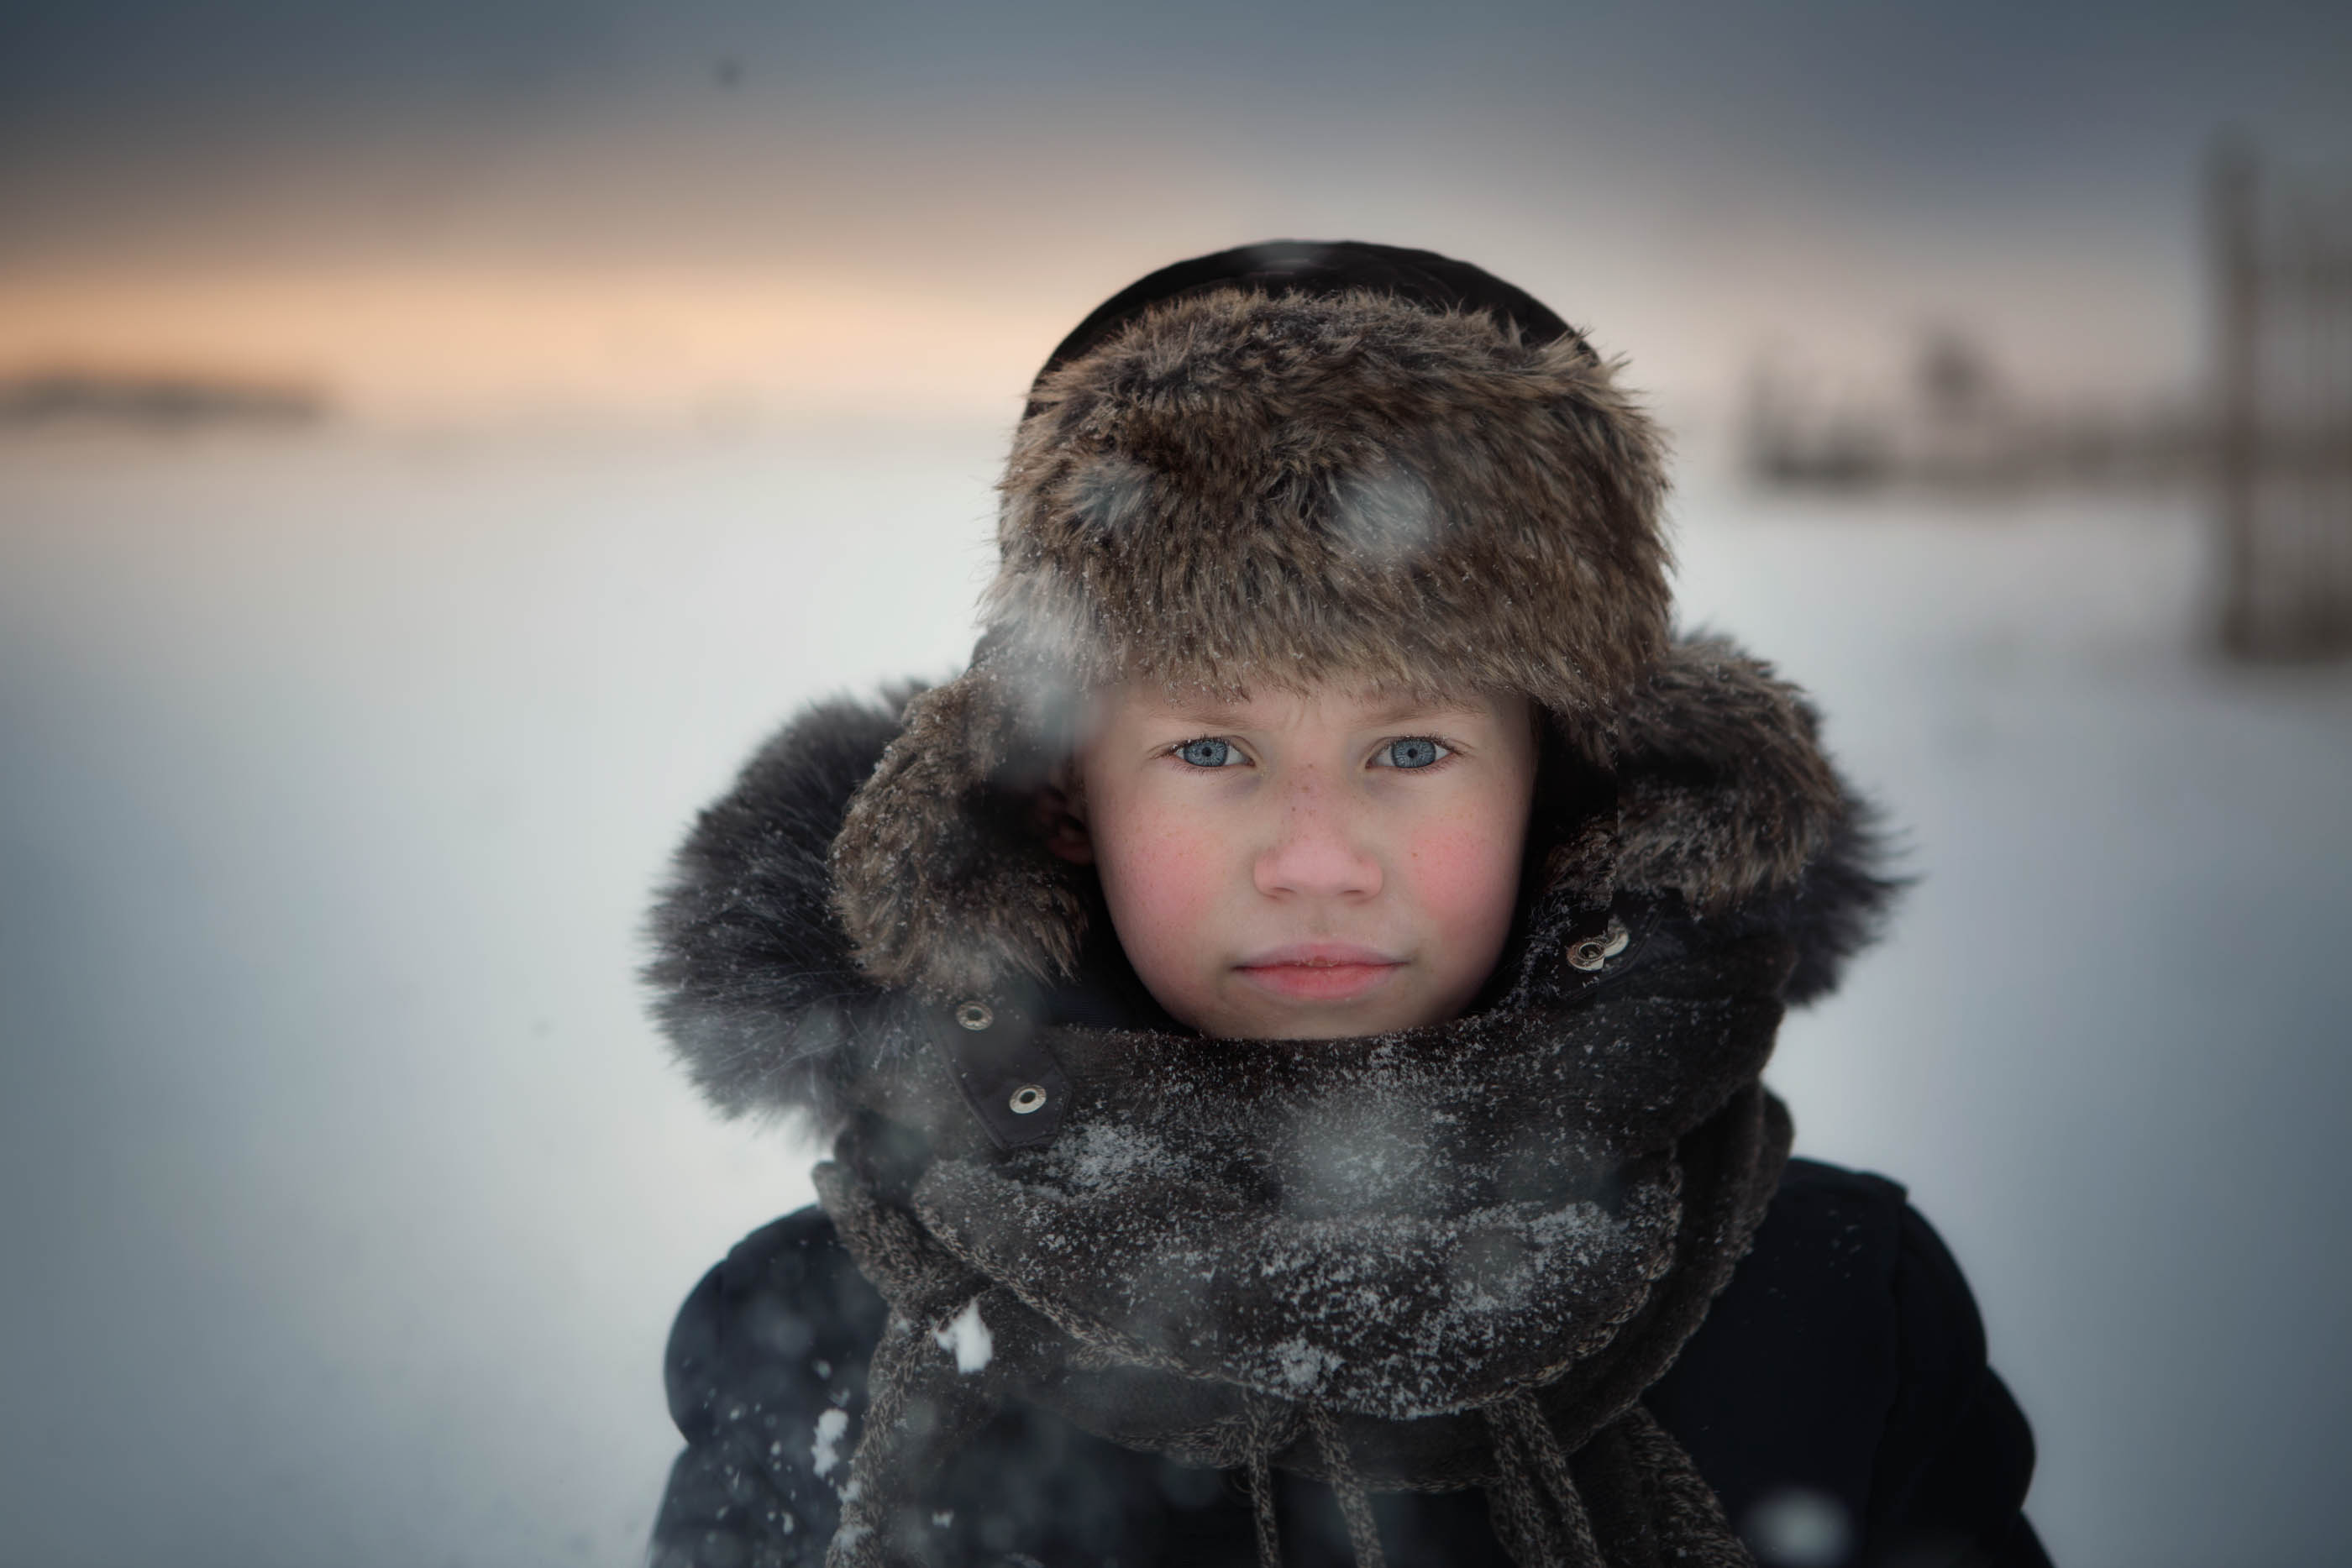 #ural #snow #snowflake #yusupovapro #yusupovaalicja, Алиция Юсупова - Alicja Yusupova